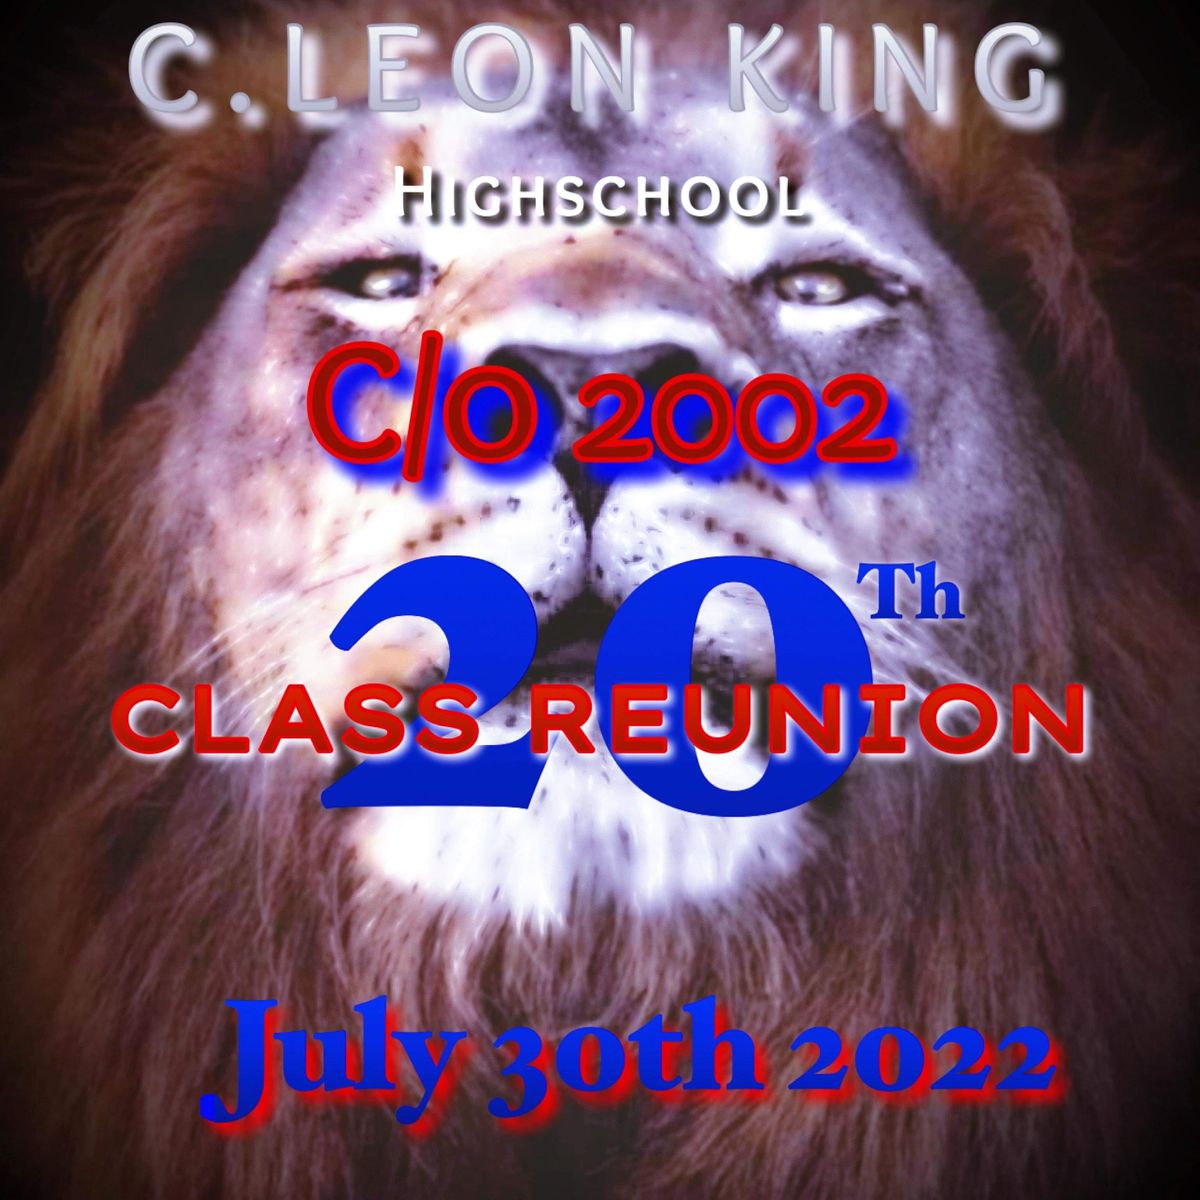 C. Leon King High School 20th Class Reunion